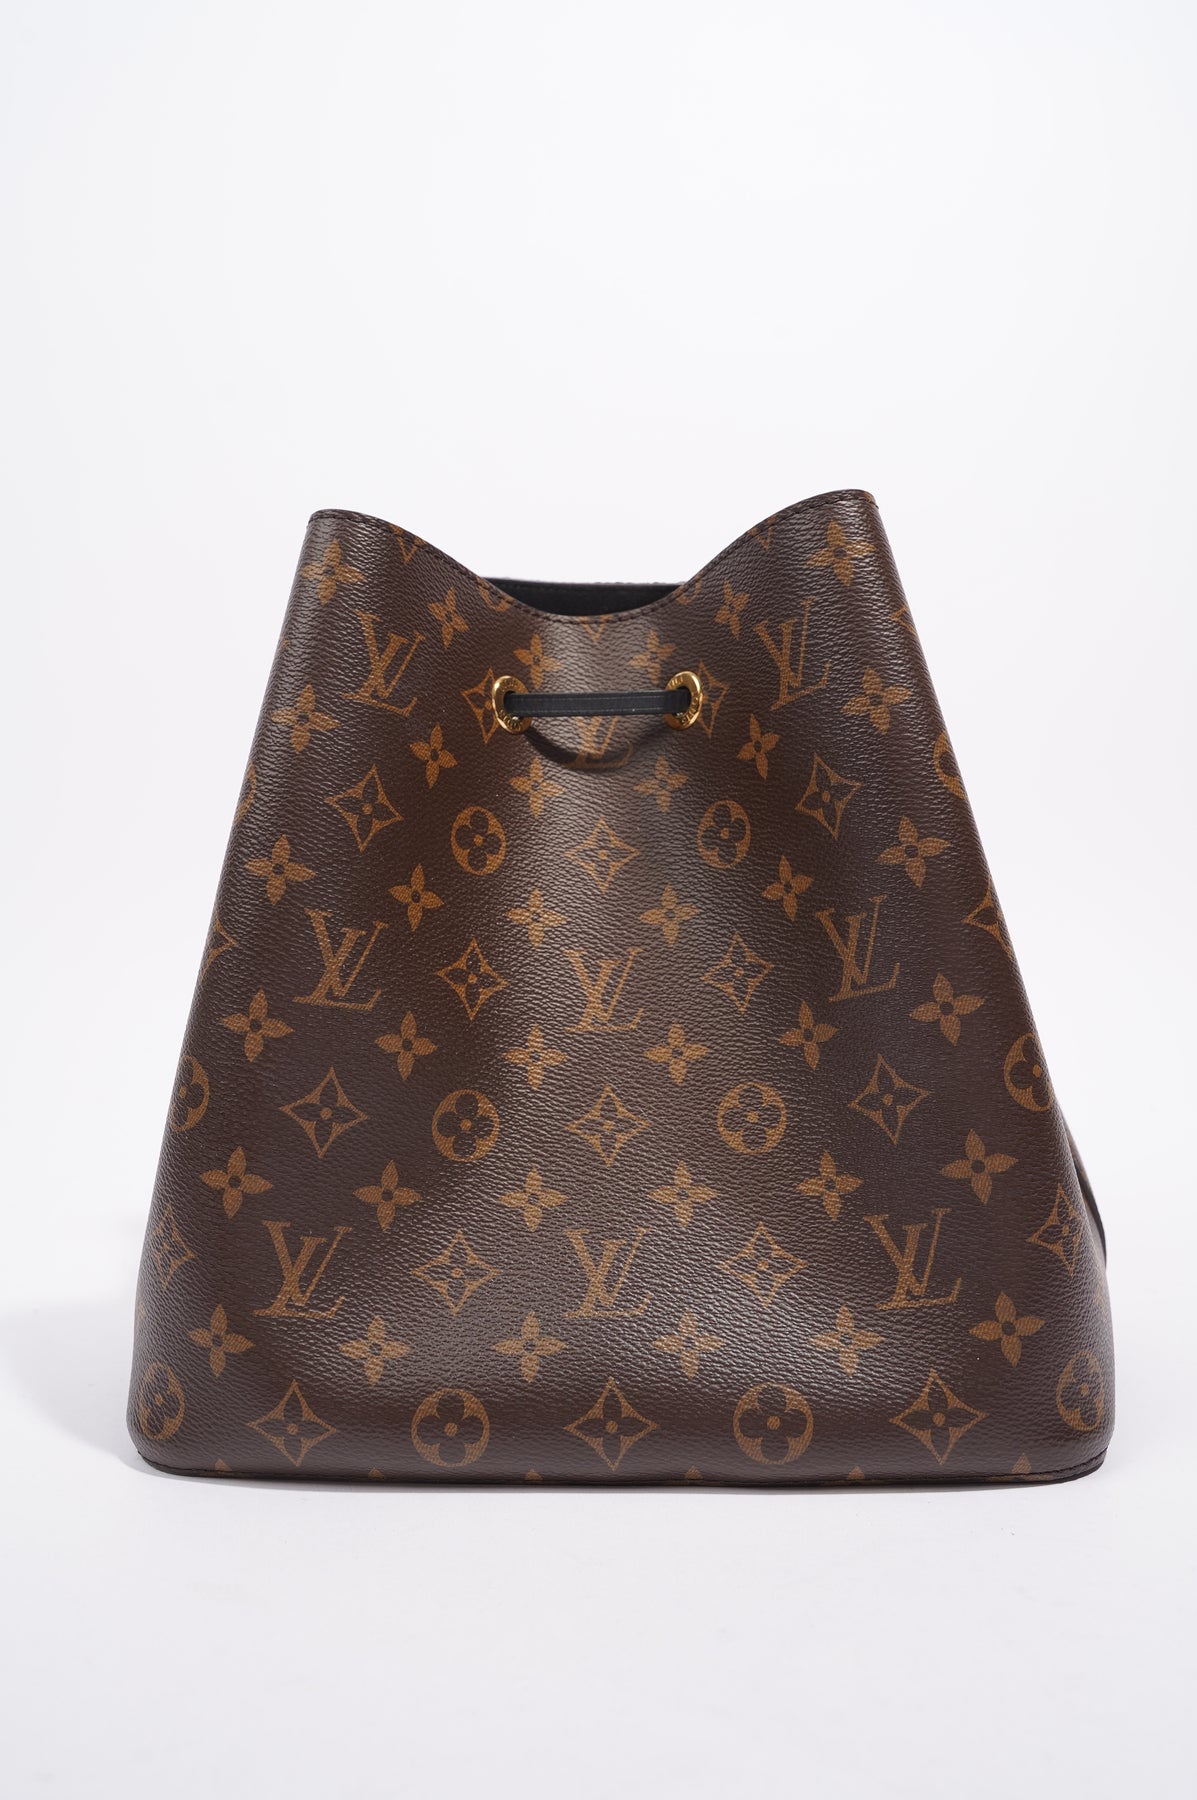 Louis Vuitton, Bags, Louie Vuitton Vintage Purse Serial Sd181